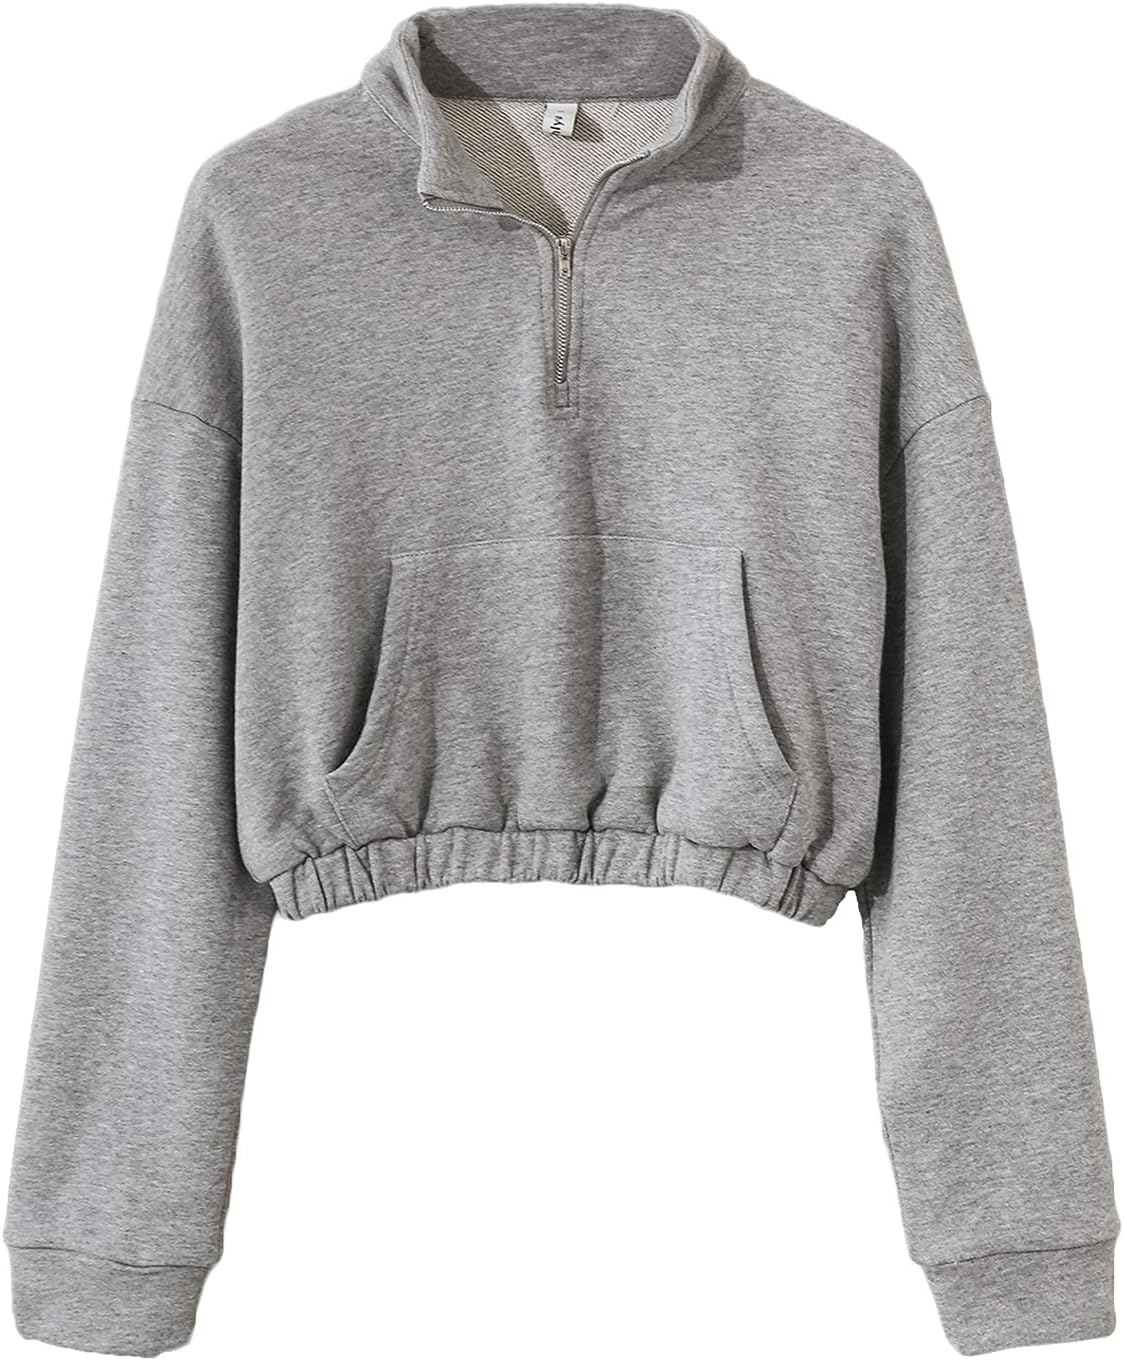 NTG Fad Grey / Medium Cropped Quarter Zip Pullover Sweatshirt Hoodie Crop Top